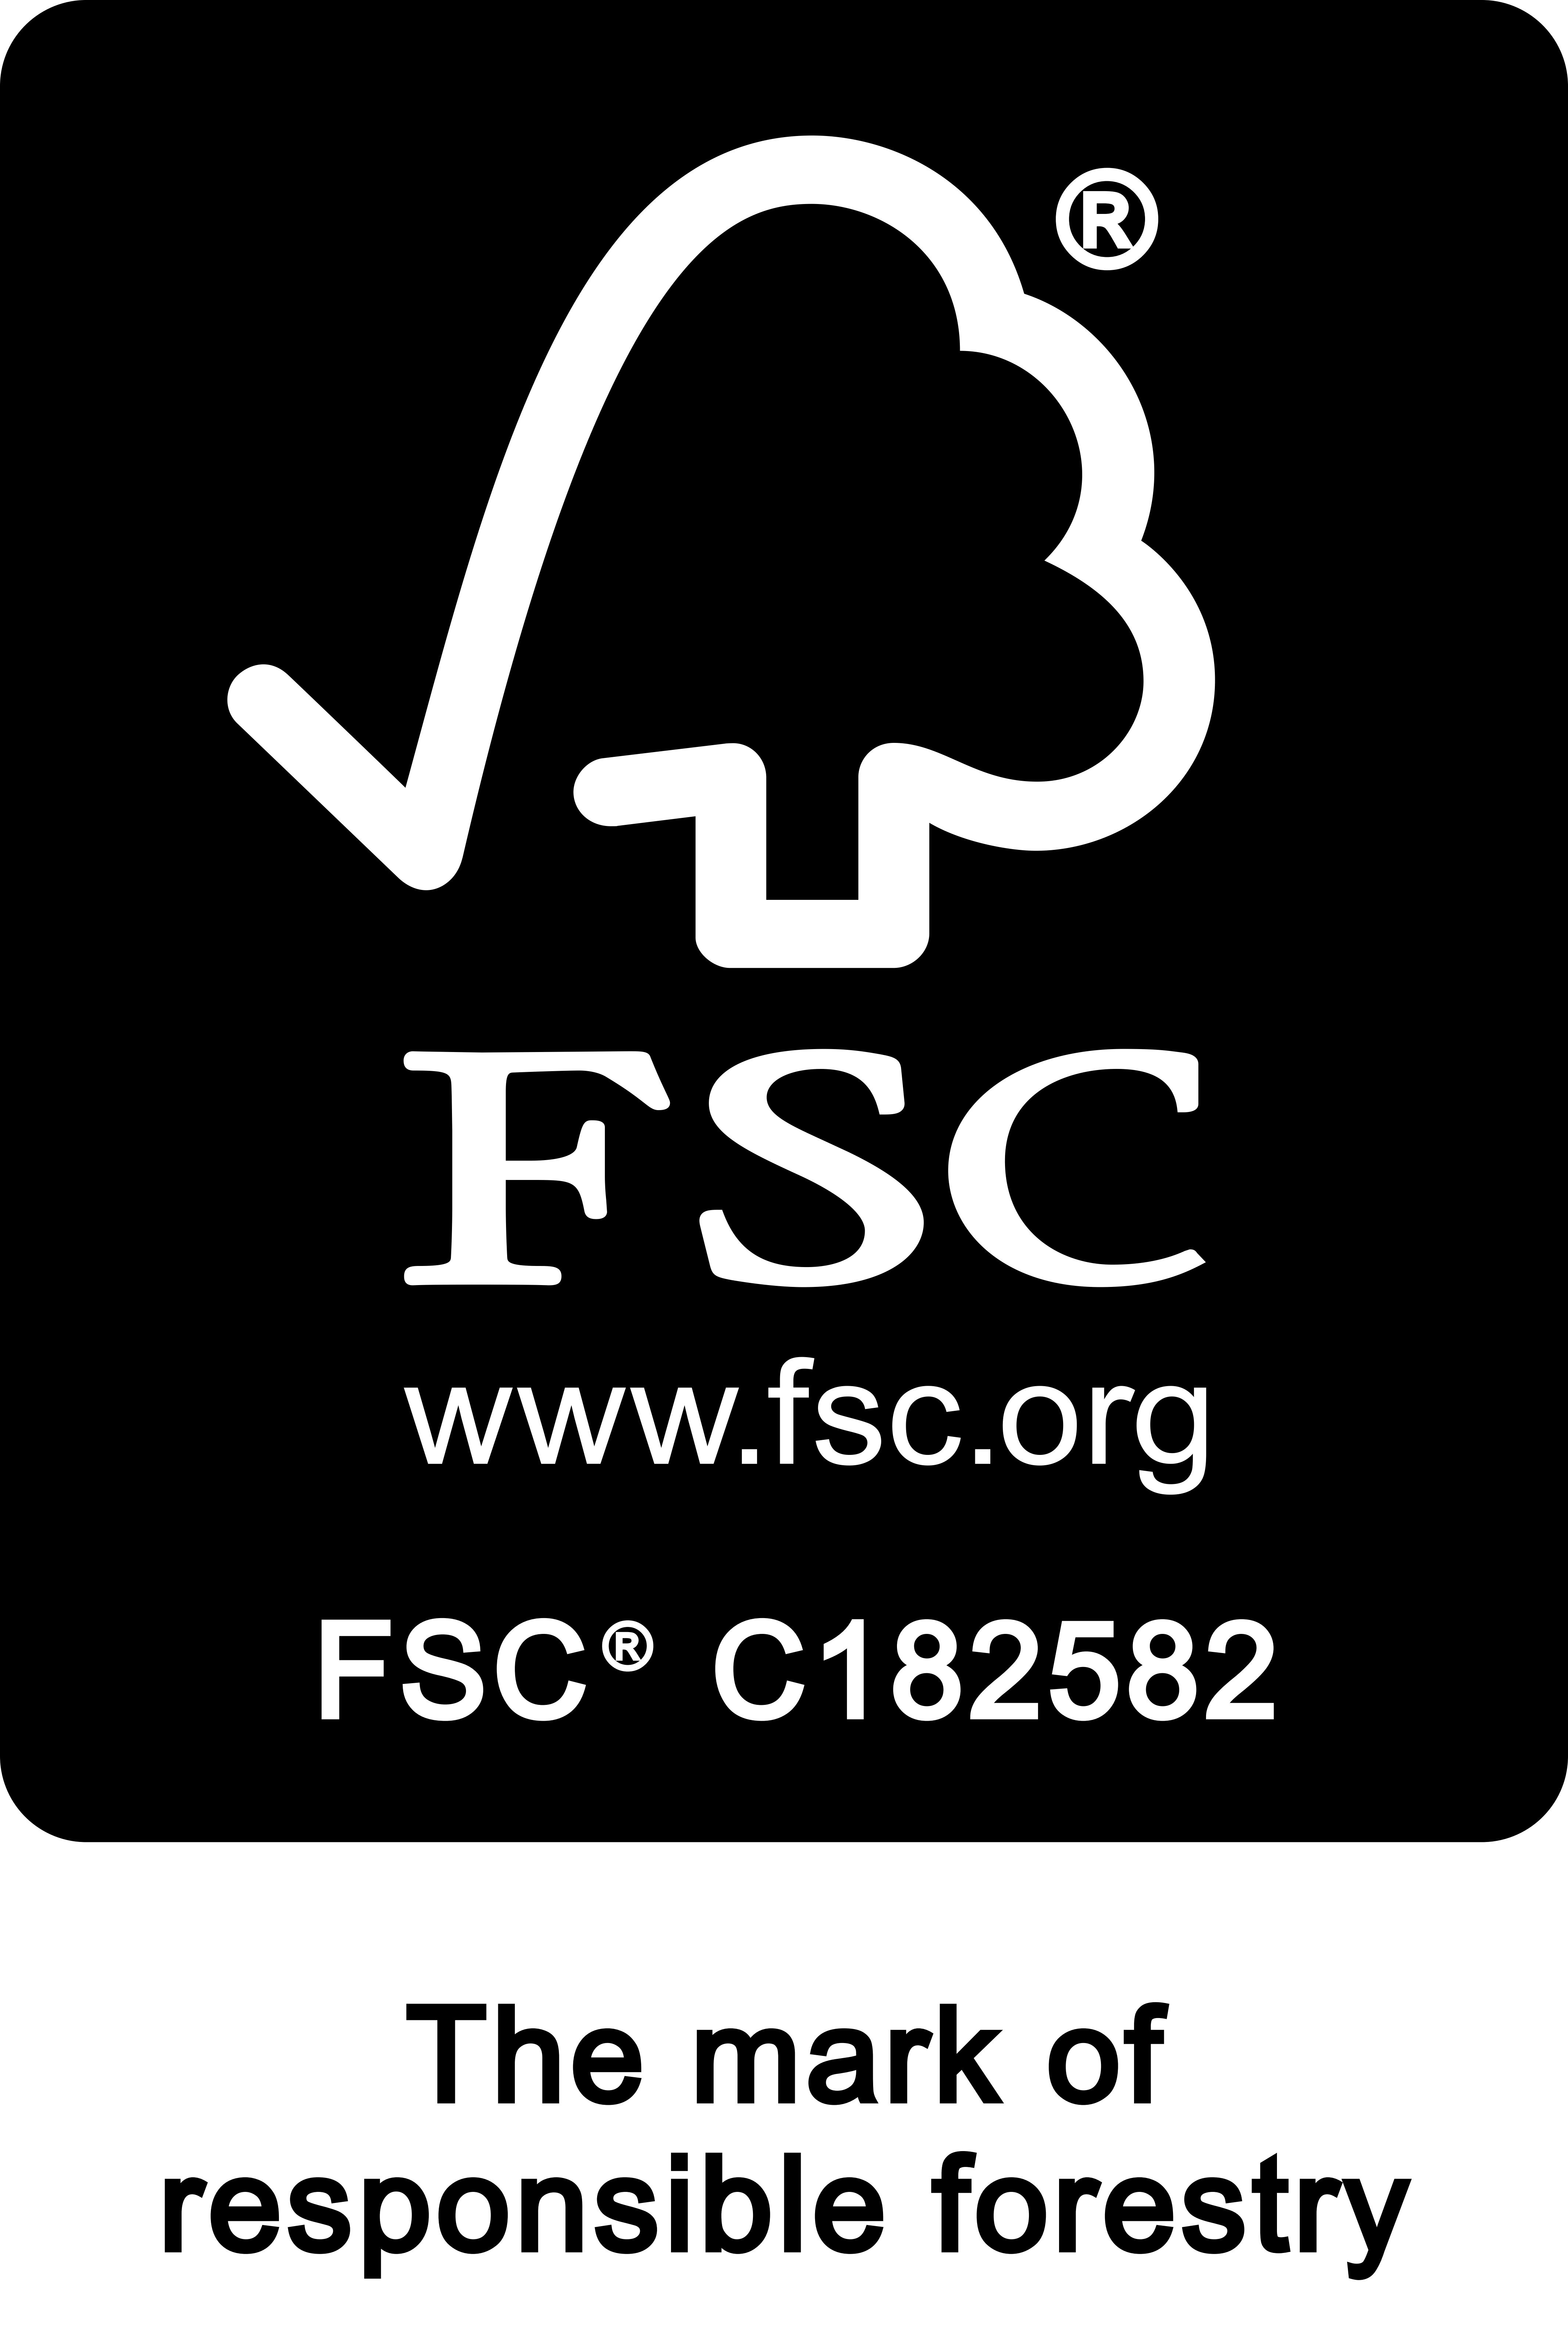  fsc-banner 